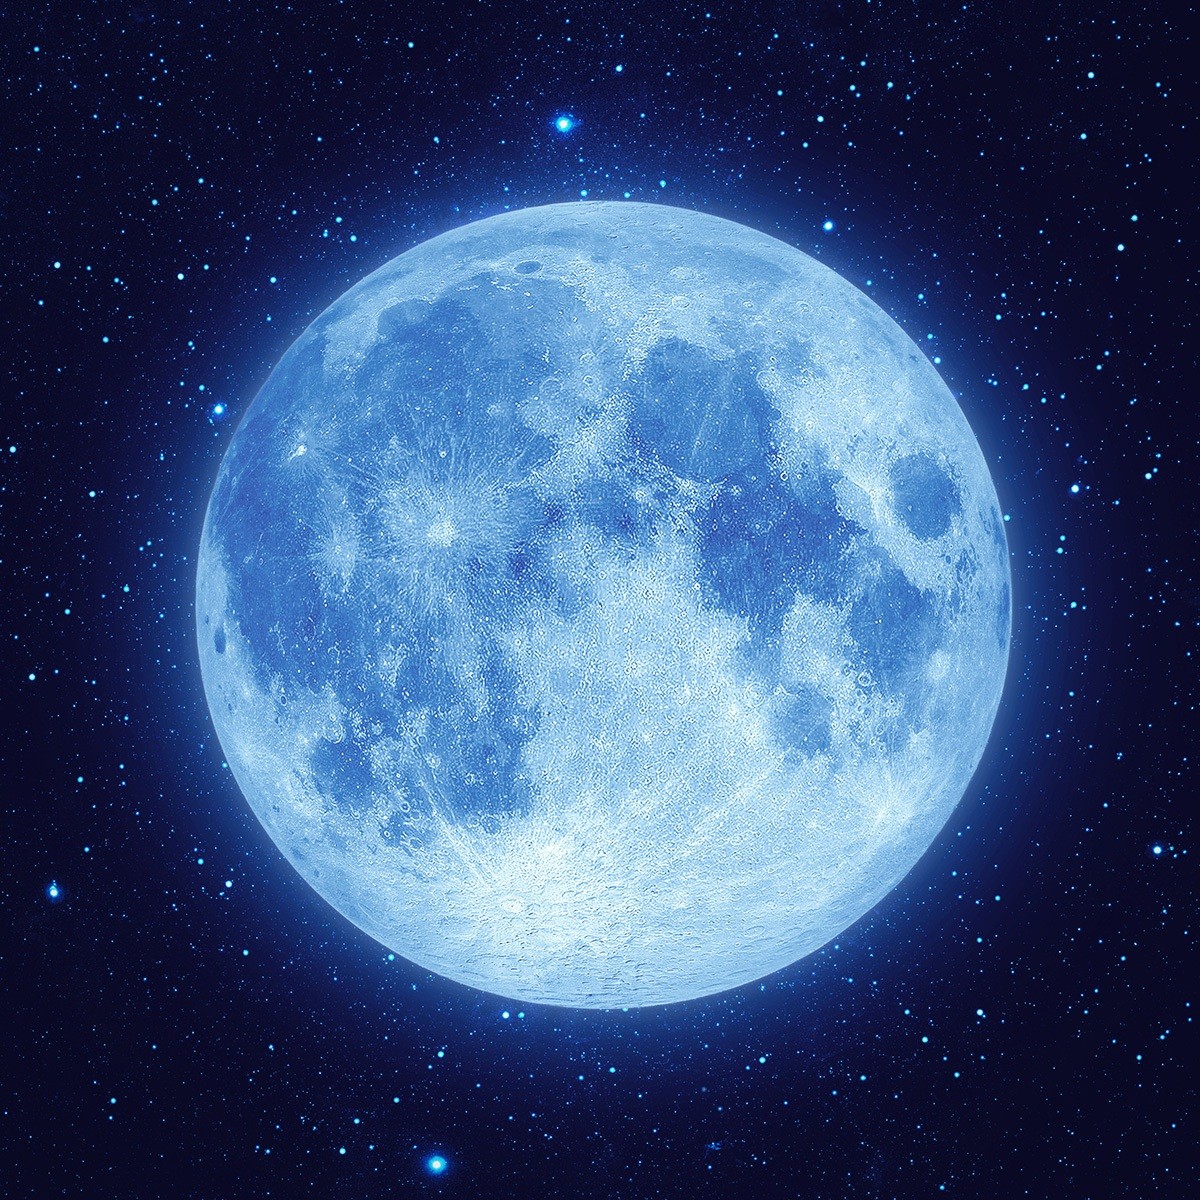 Full Moon image